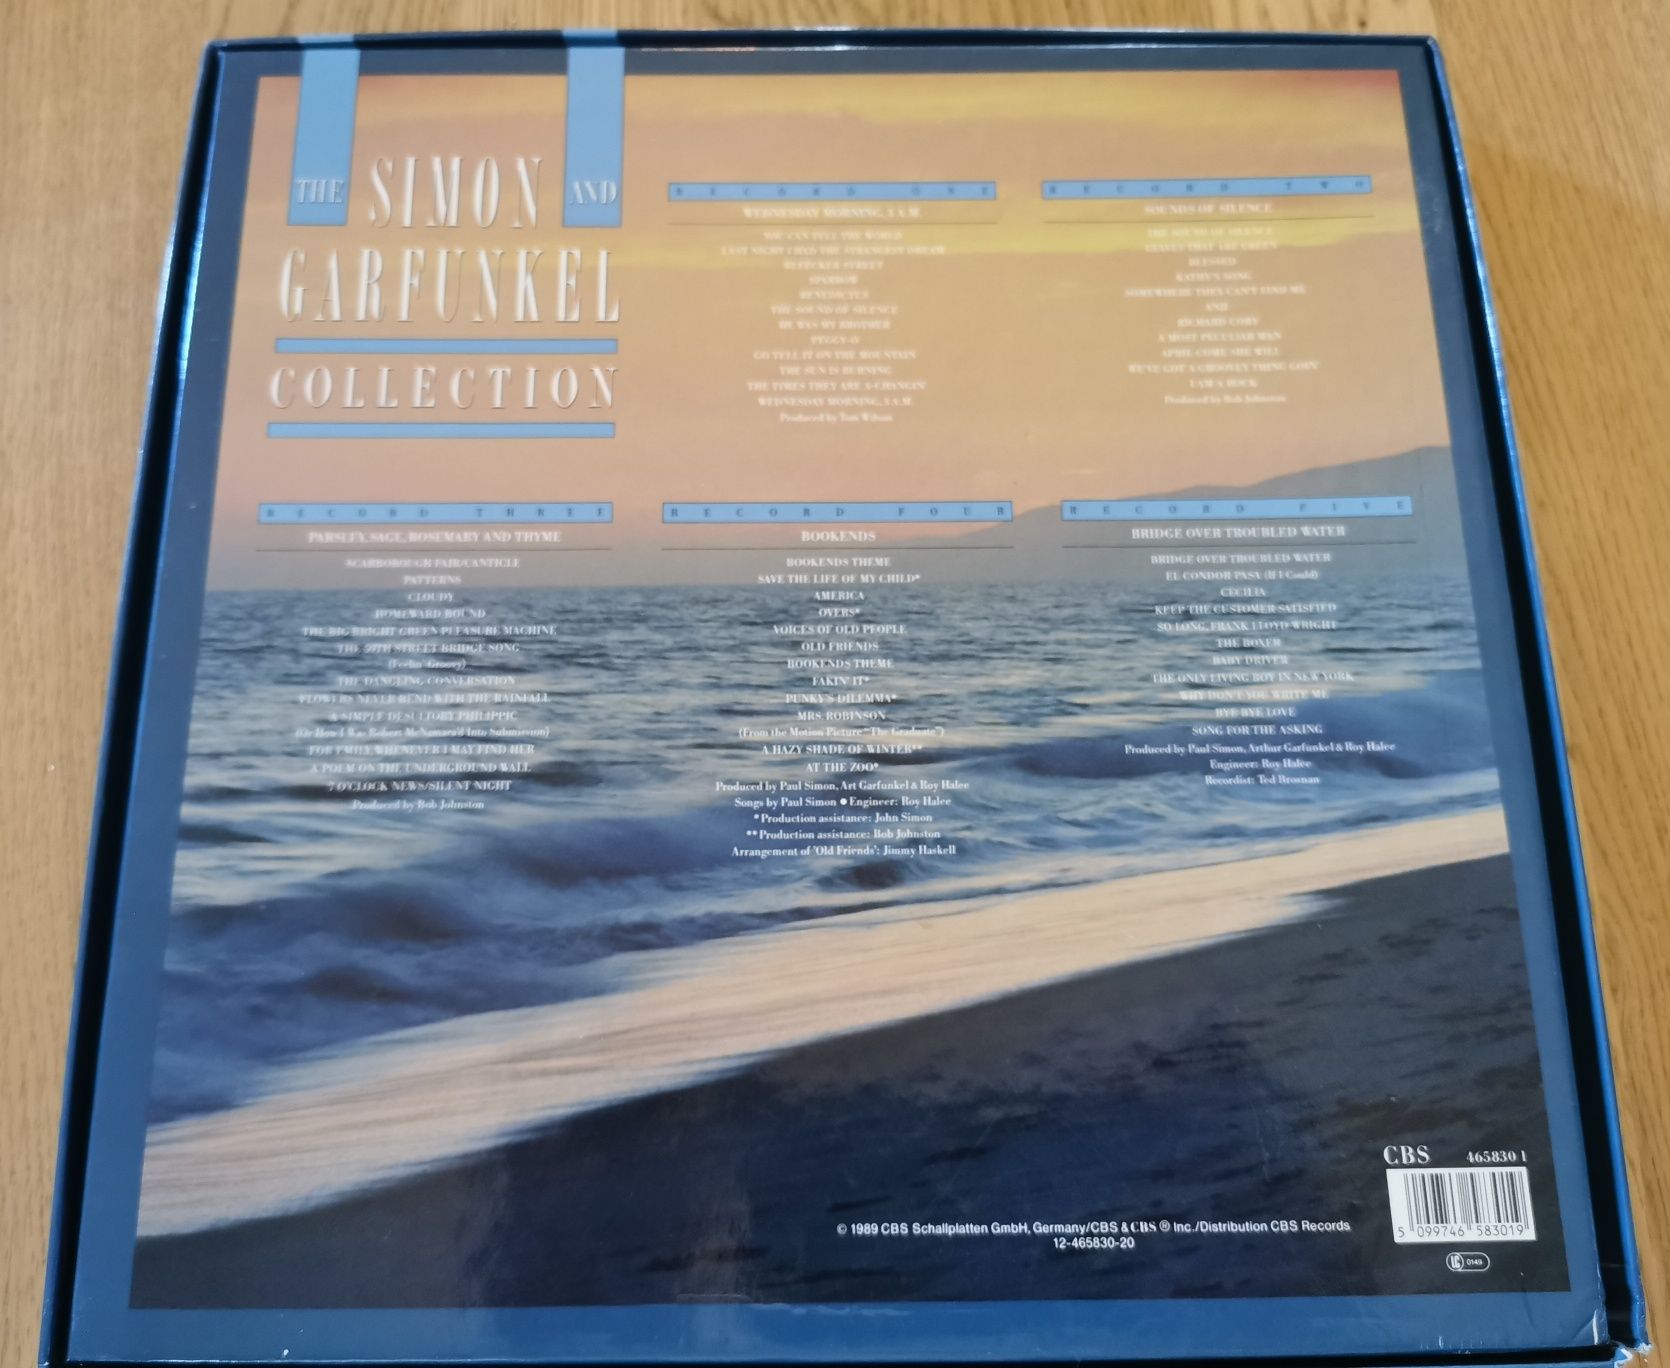 Colectie/boxset 5 vinyluri Simon&Garfunkel